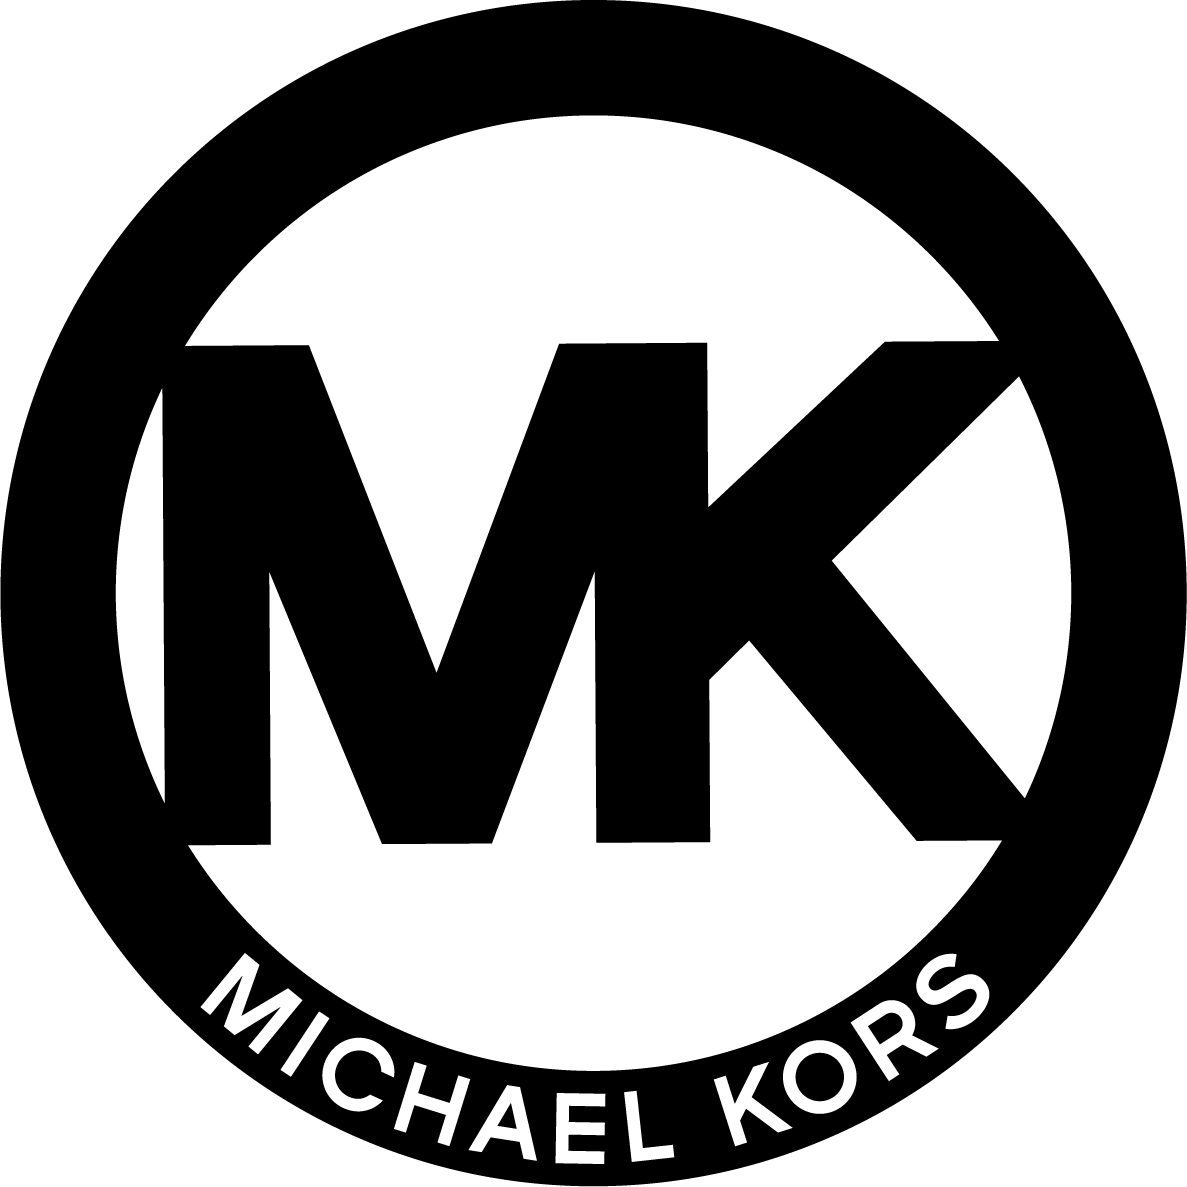 Logo relojes michael kors